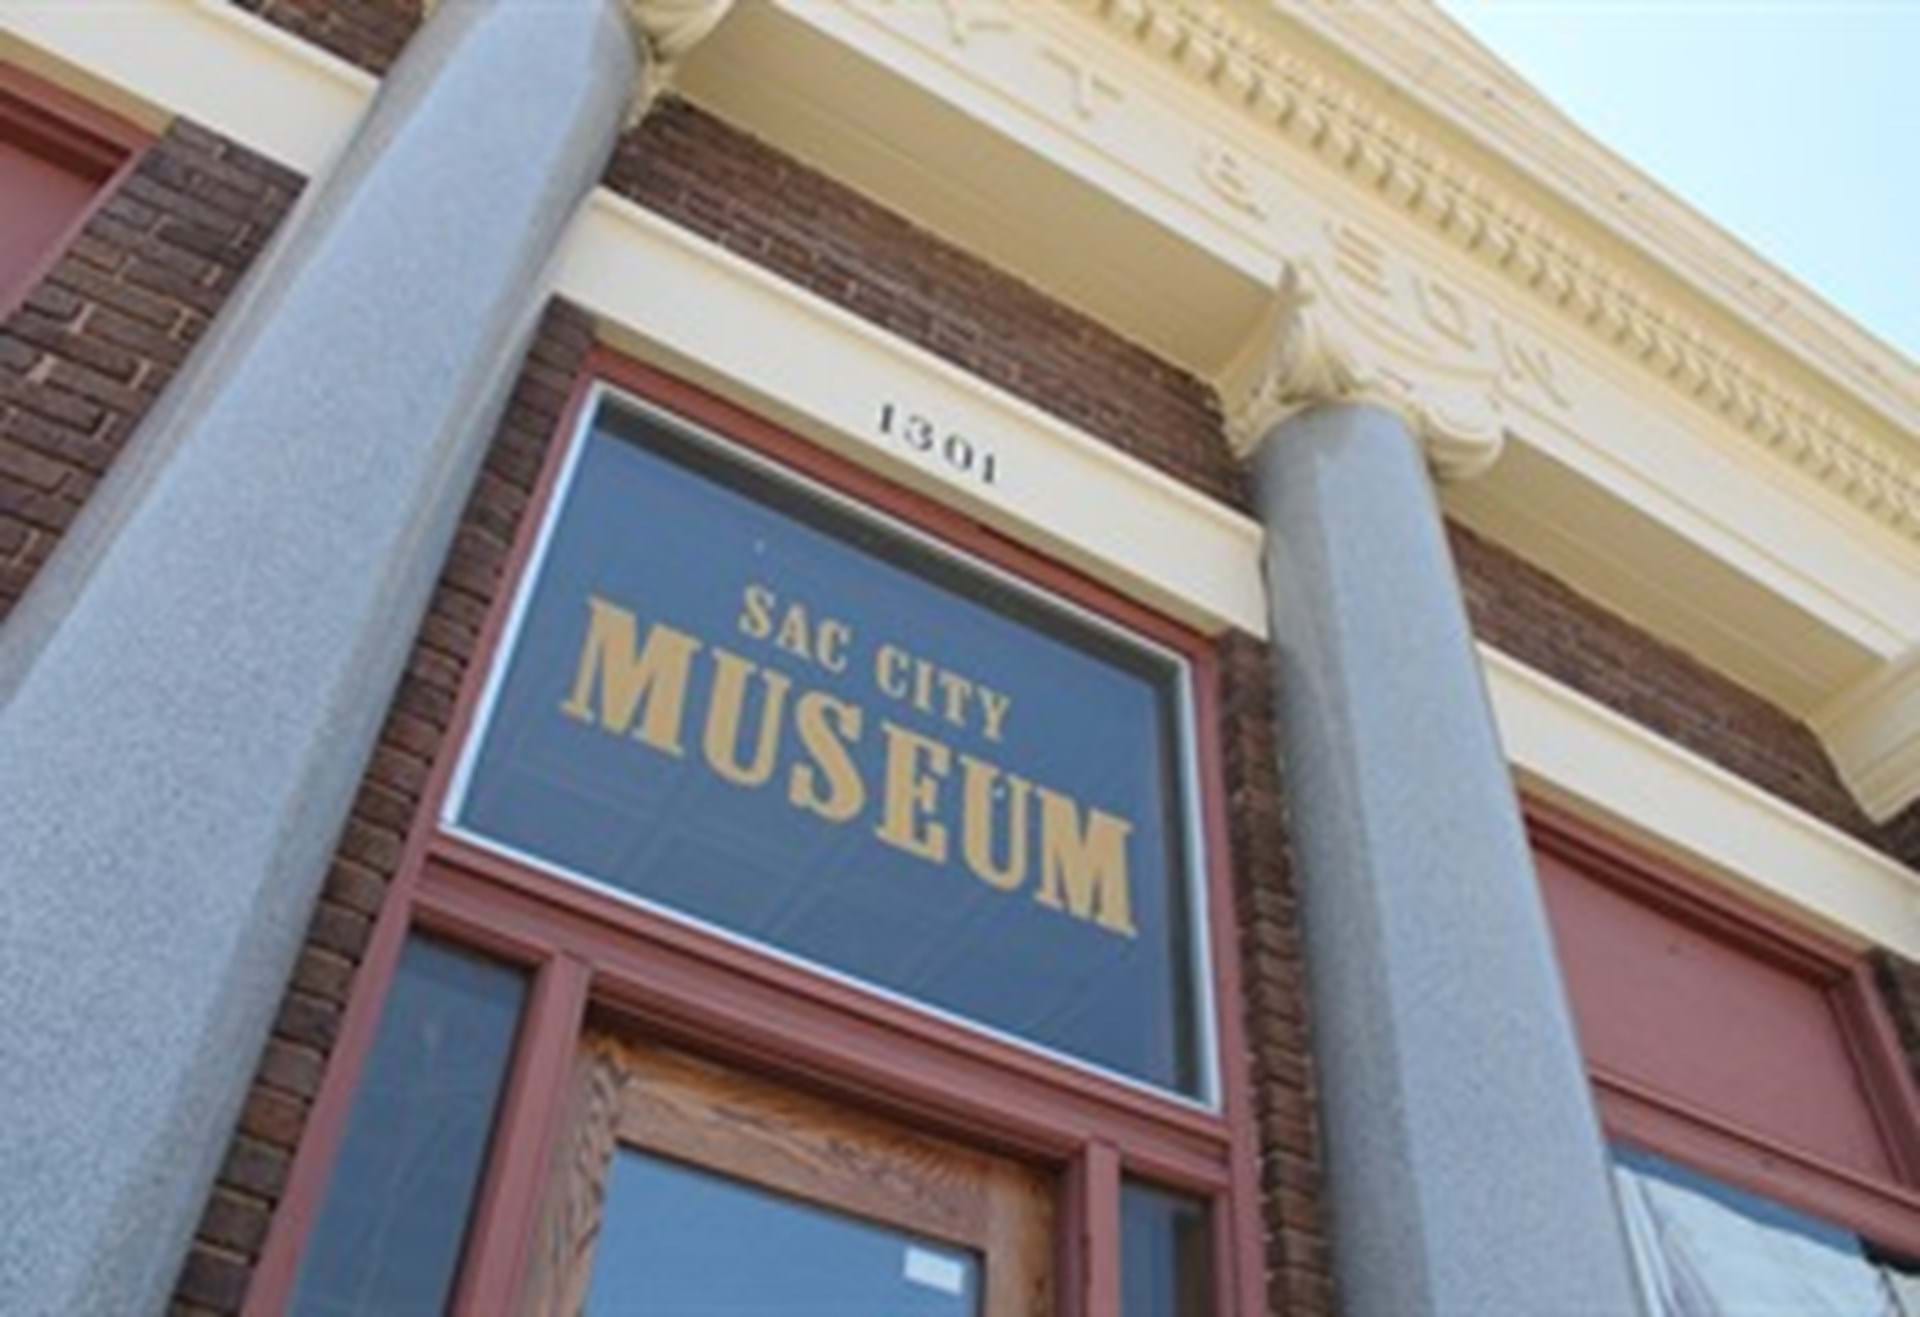 Sac City Museum